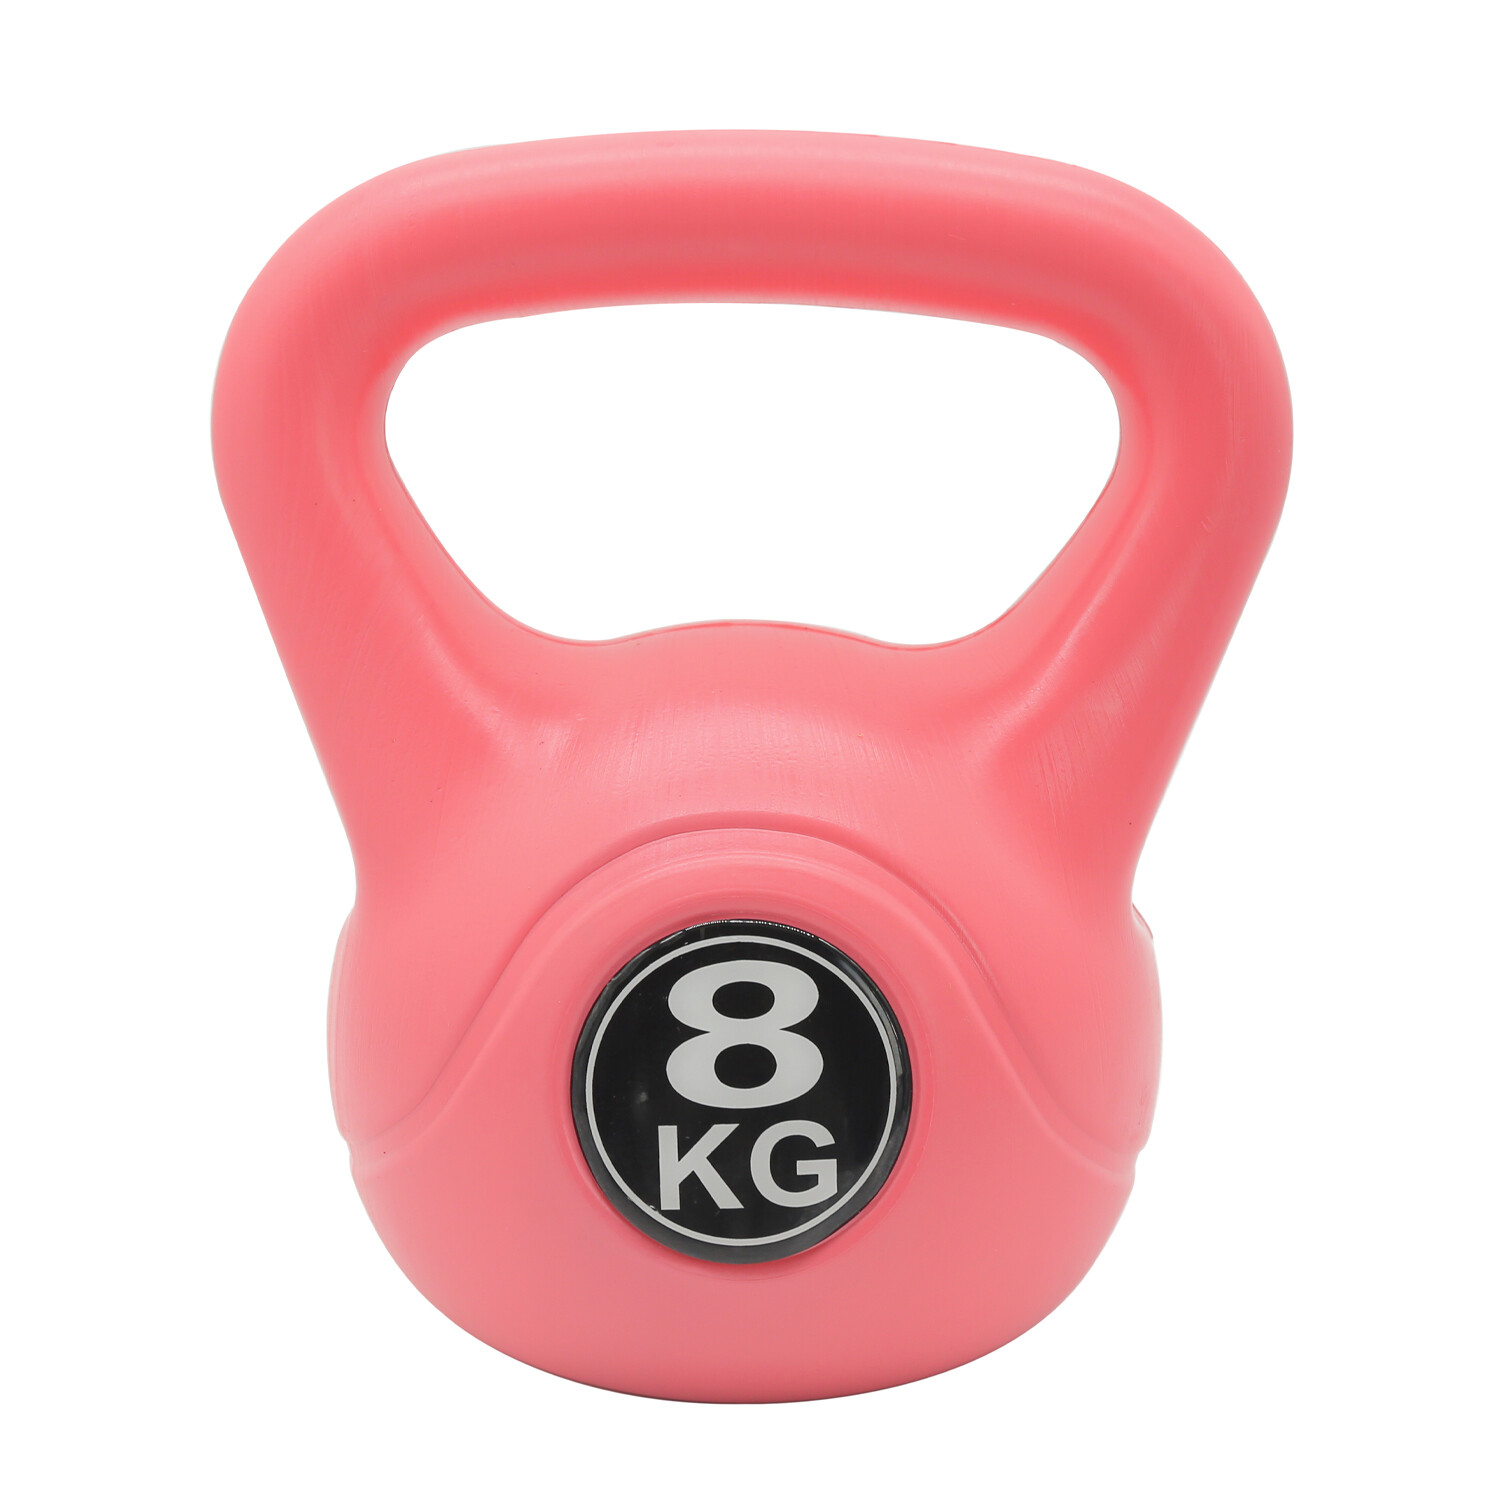 Active Sport Kettlebell - 8kg Image 1